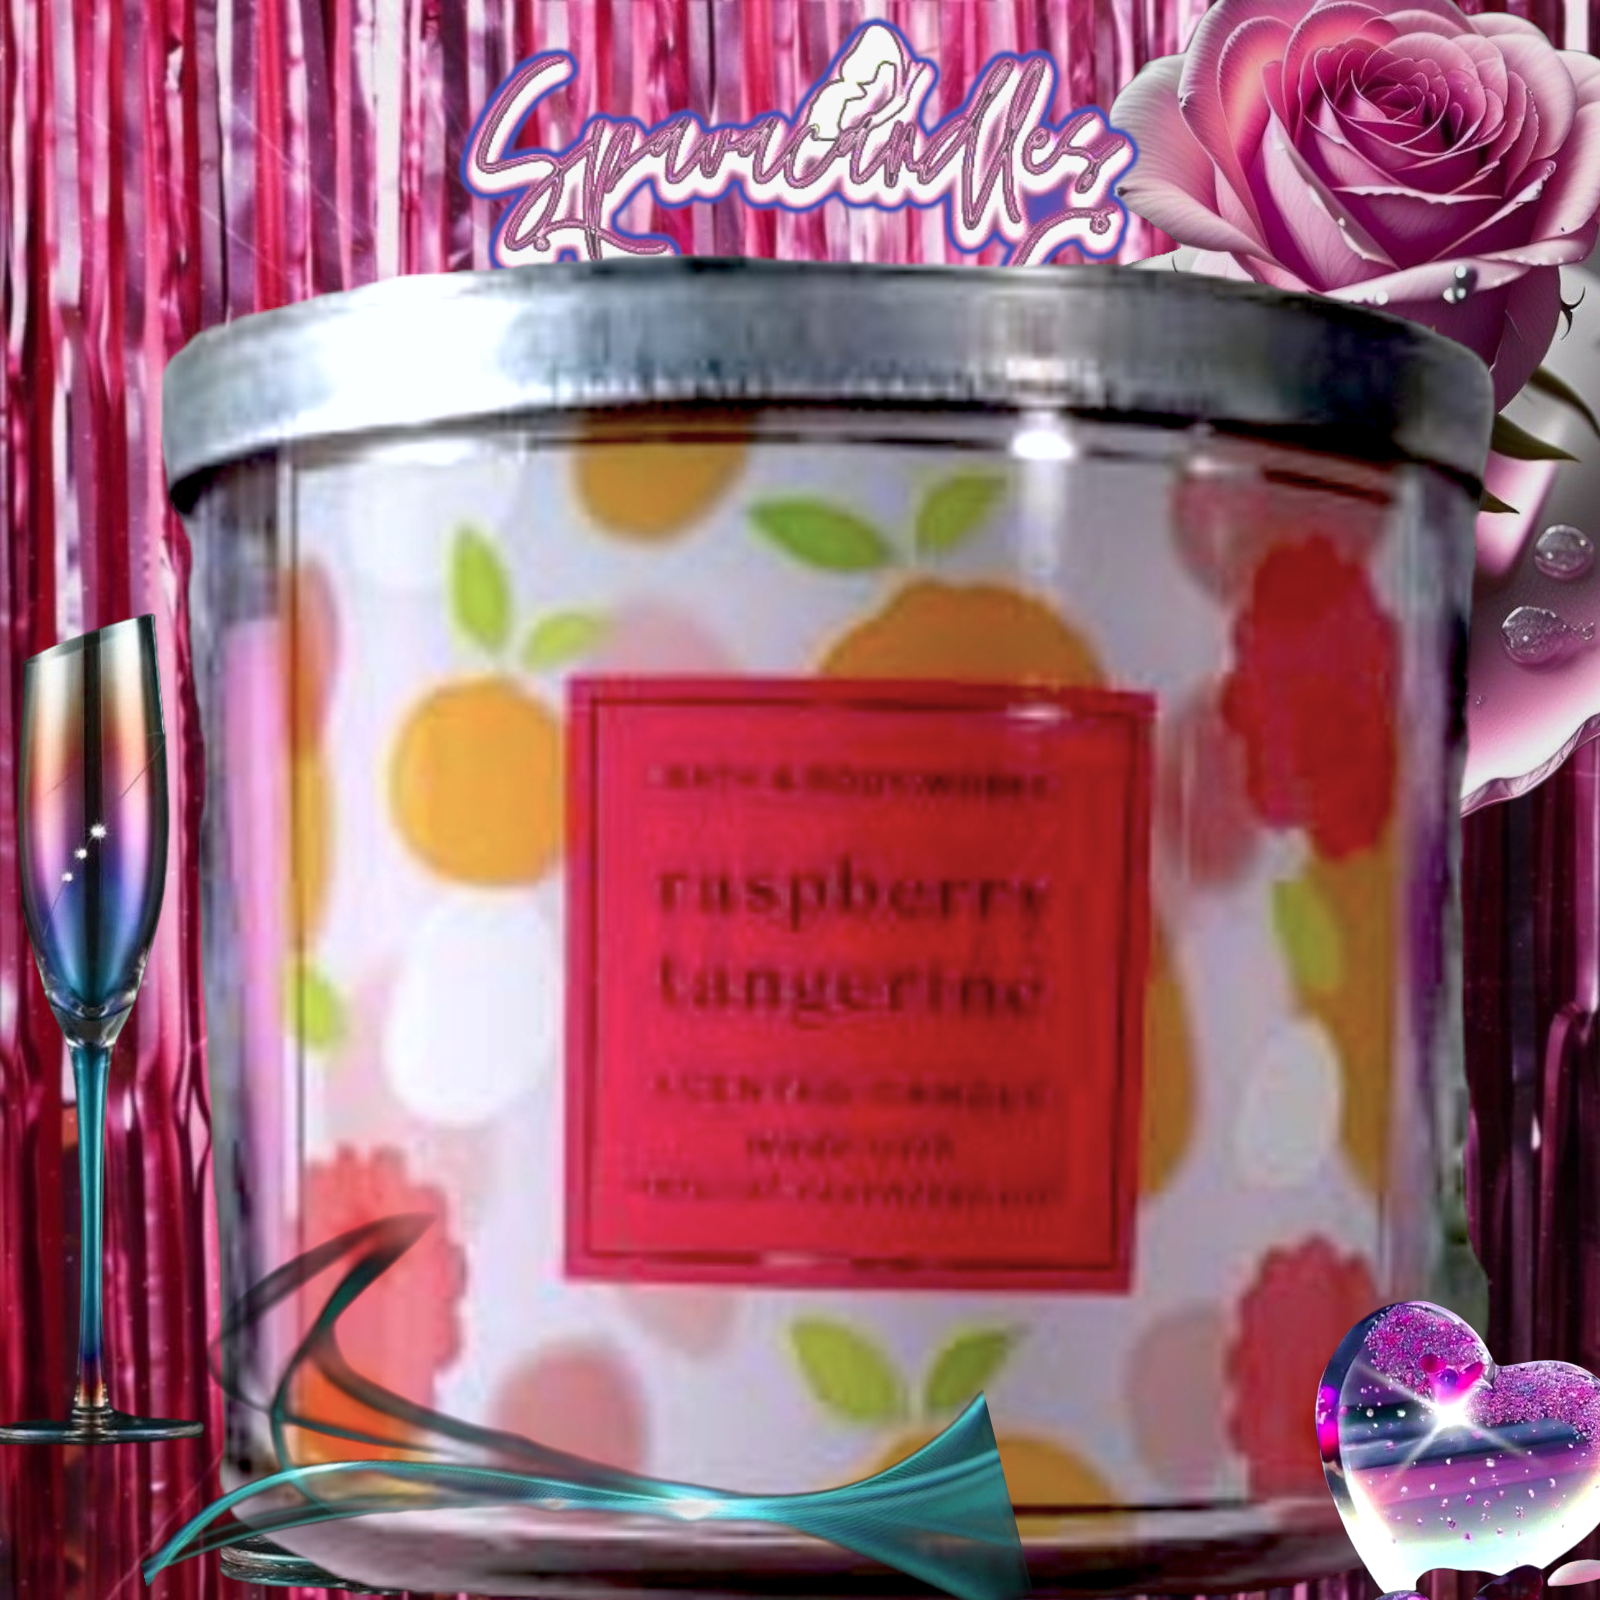 Raspberry Tangerine Wick Candle